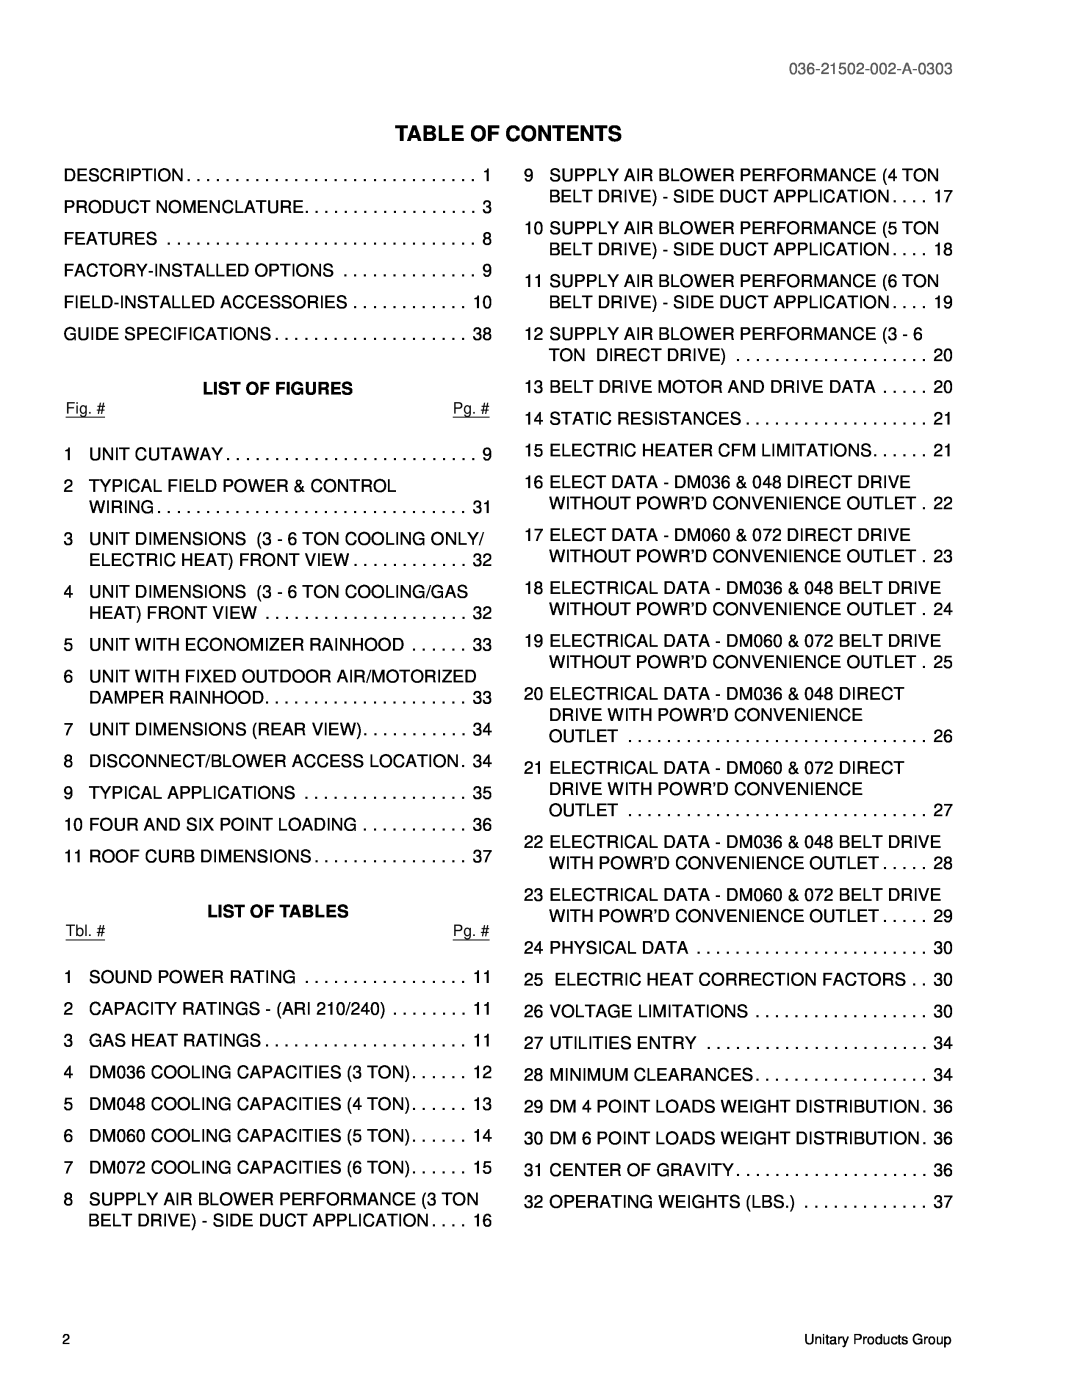 York DM 048, DM072, DM 060, DM 036 warranty Table Of Contents, List Of Figures, List Of Tables 